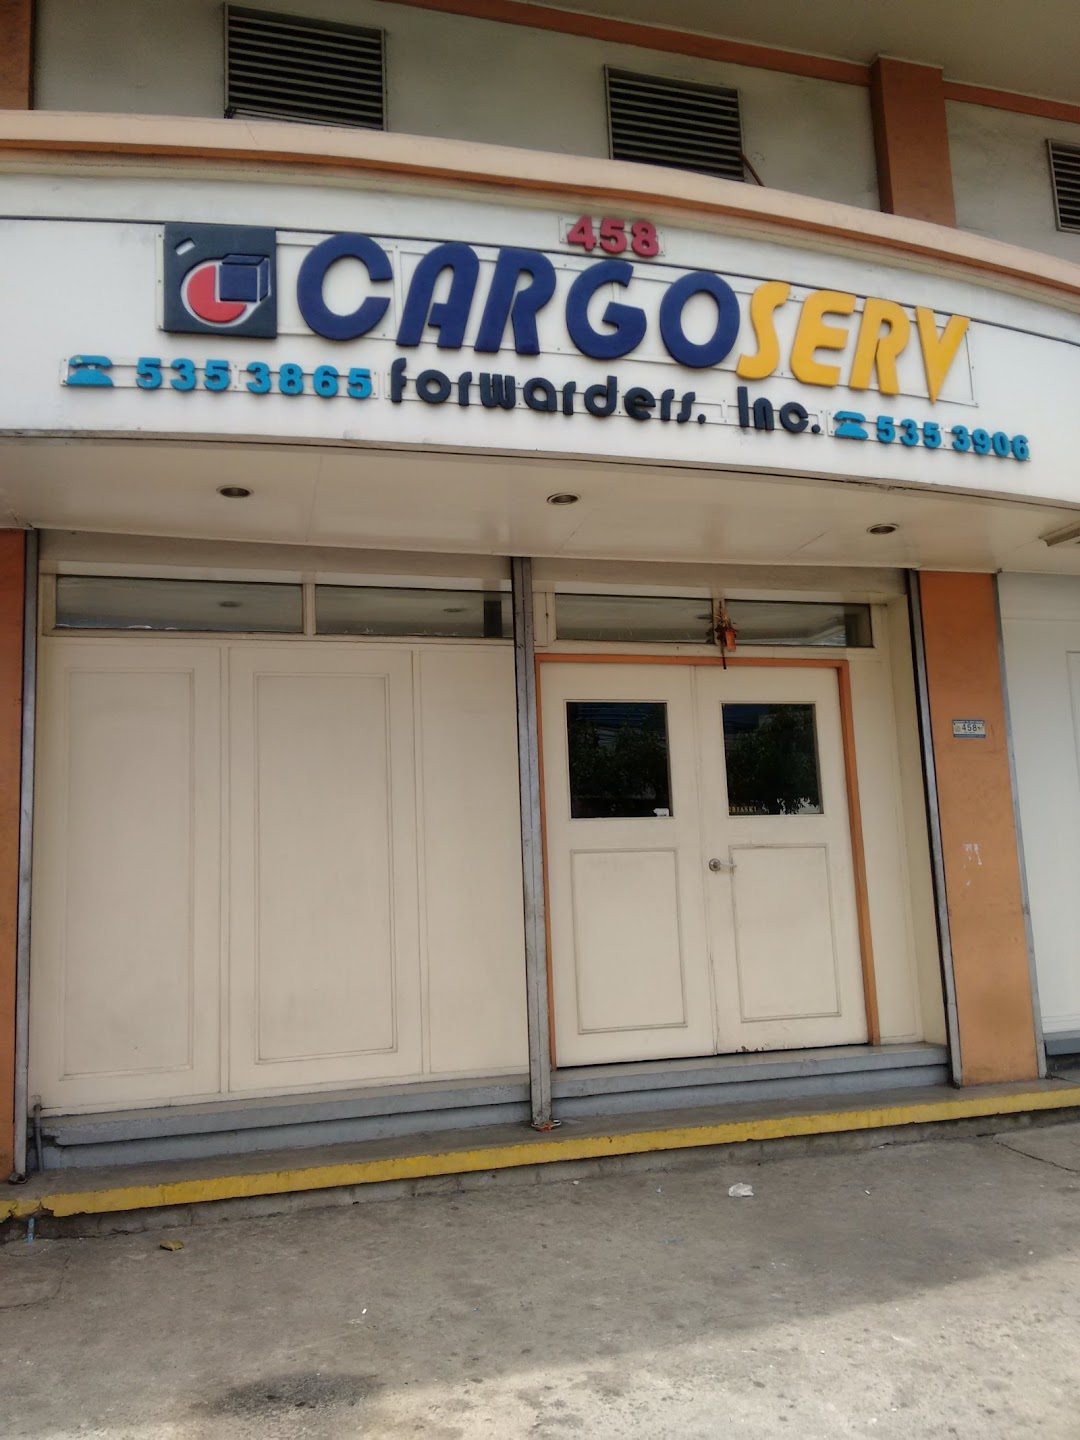 Cargoserv